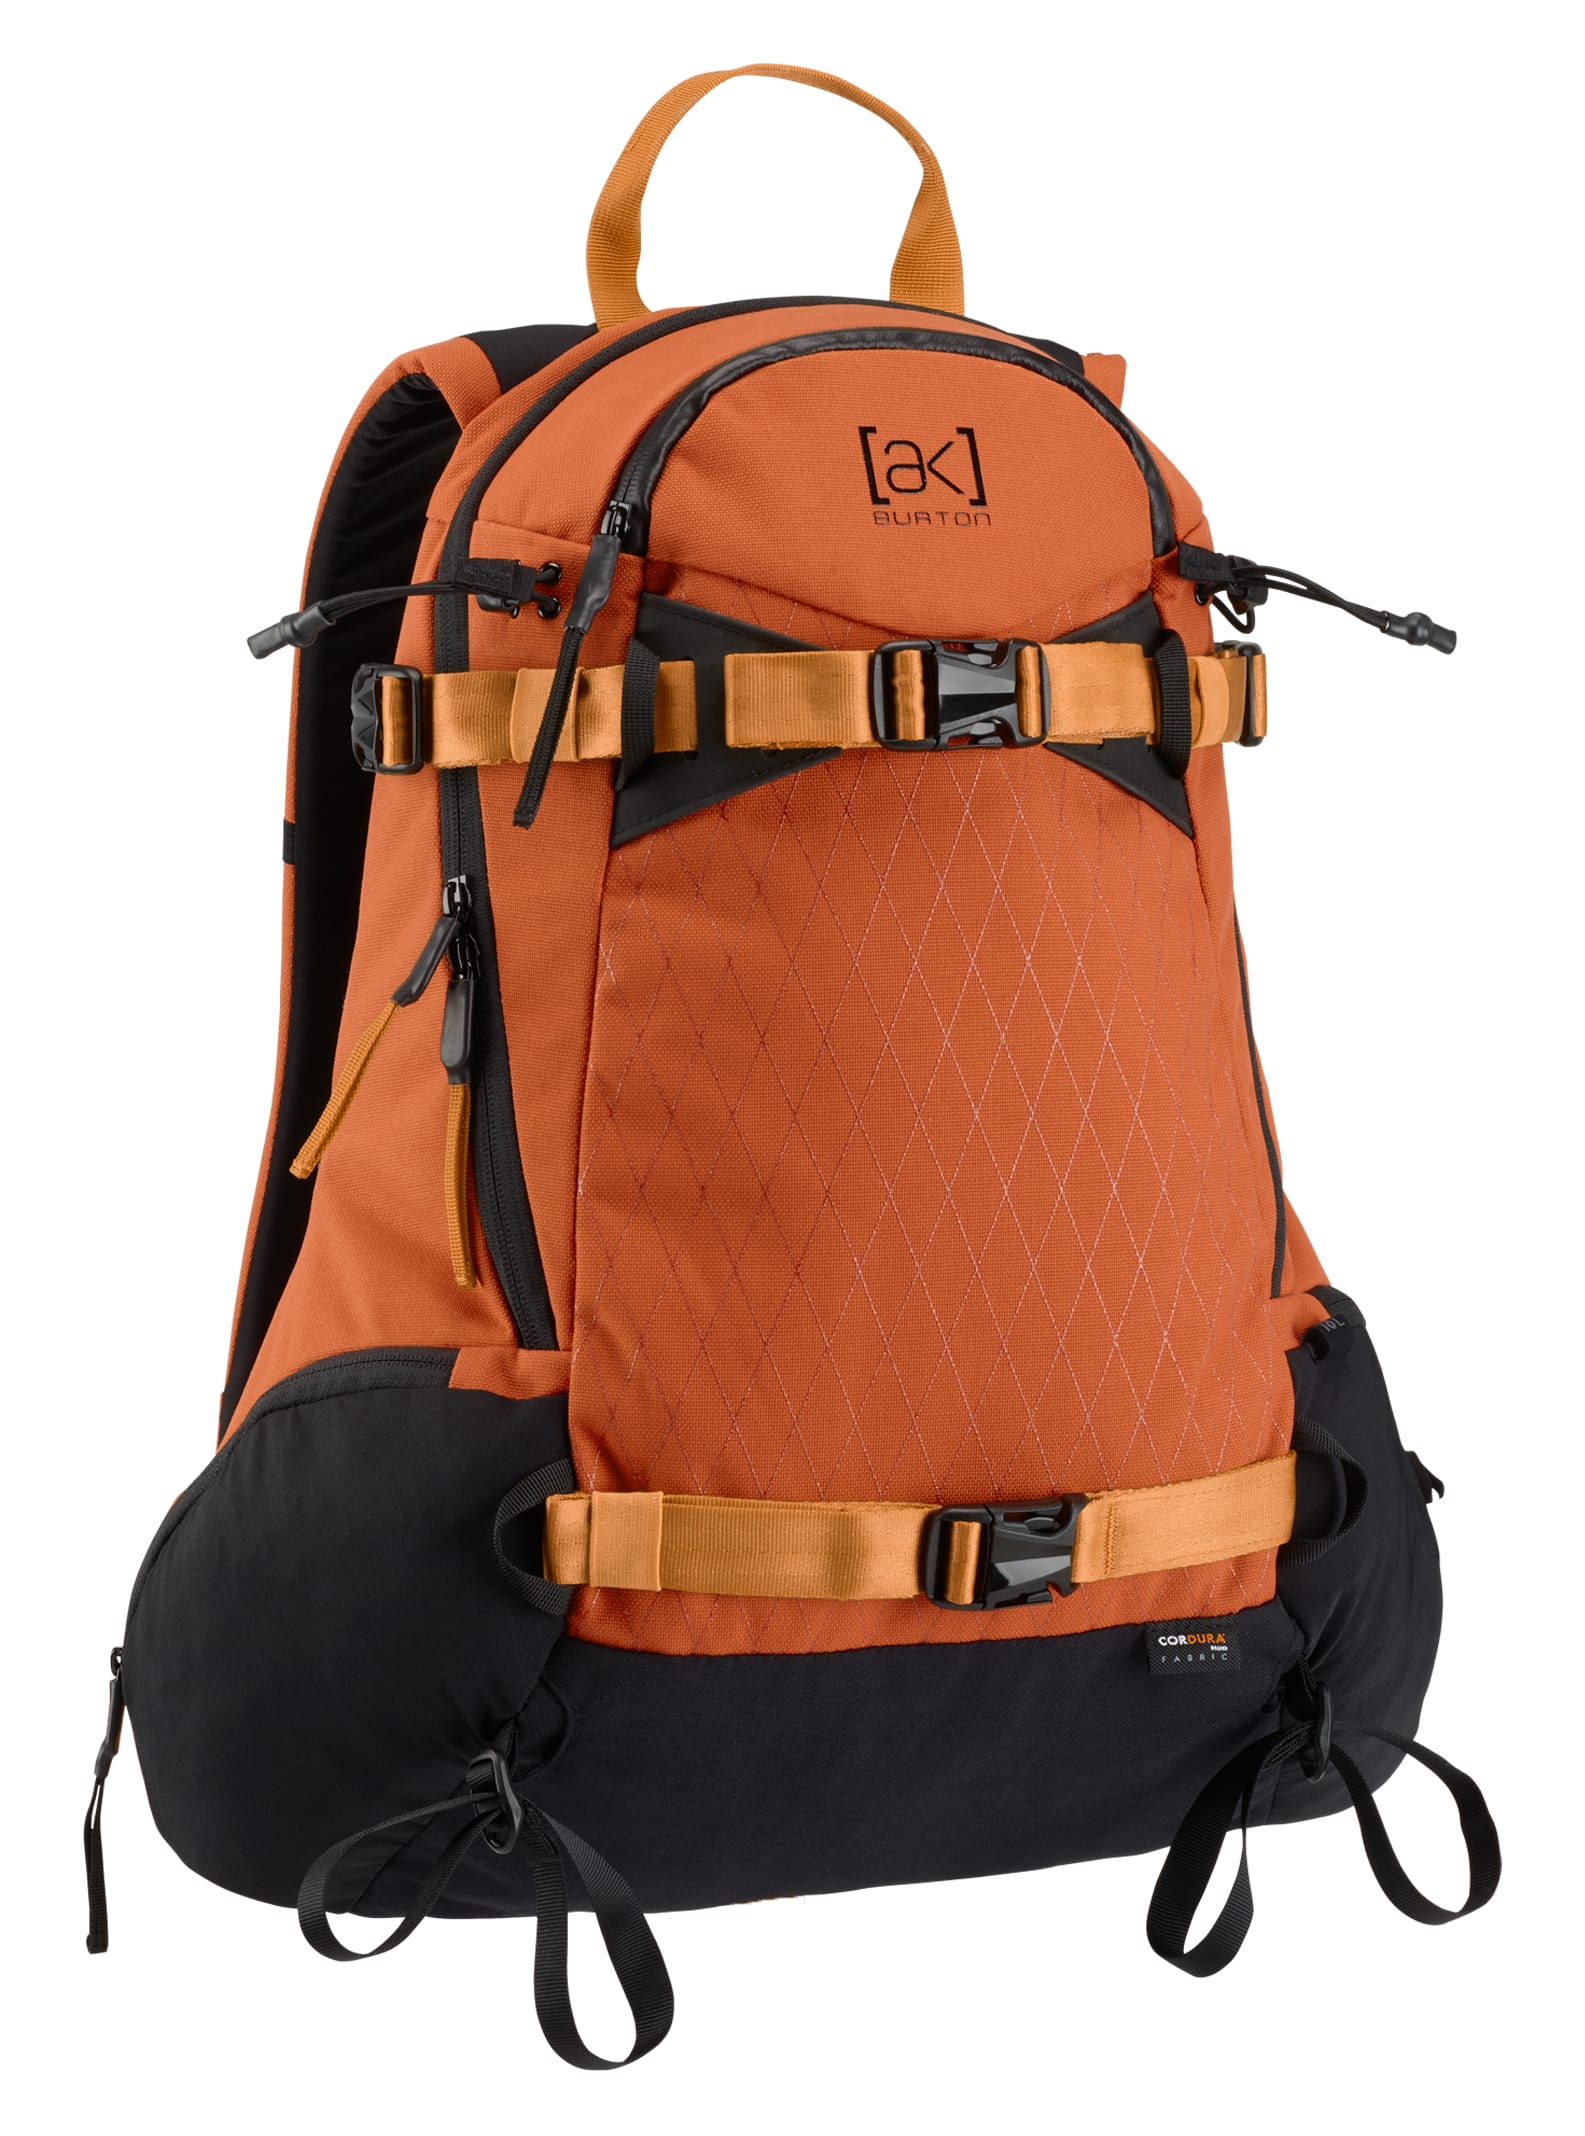 Burton [ak] Sidecountry 20L Backpack | Burton.com Winter 2019 US